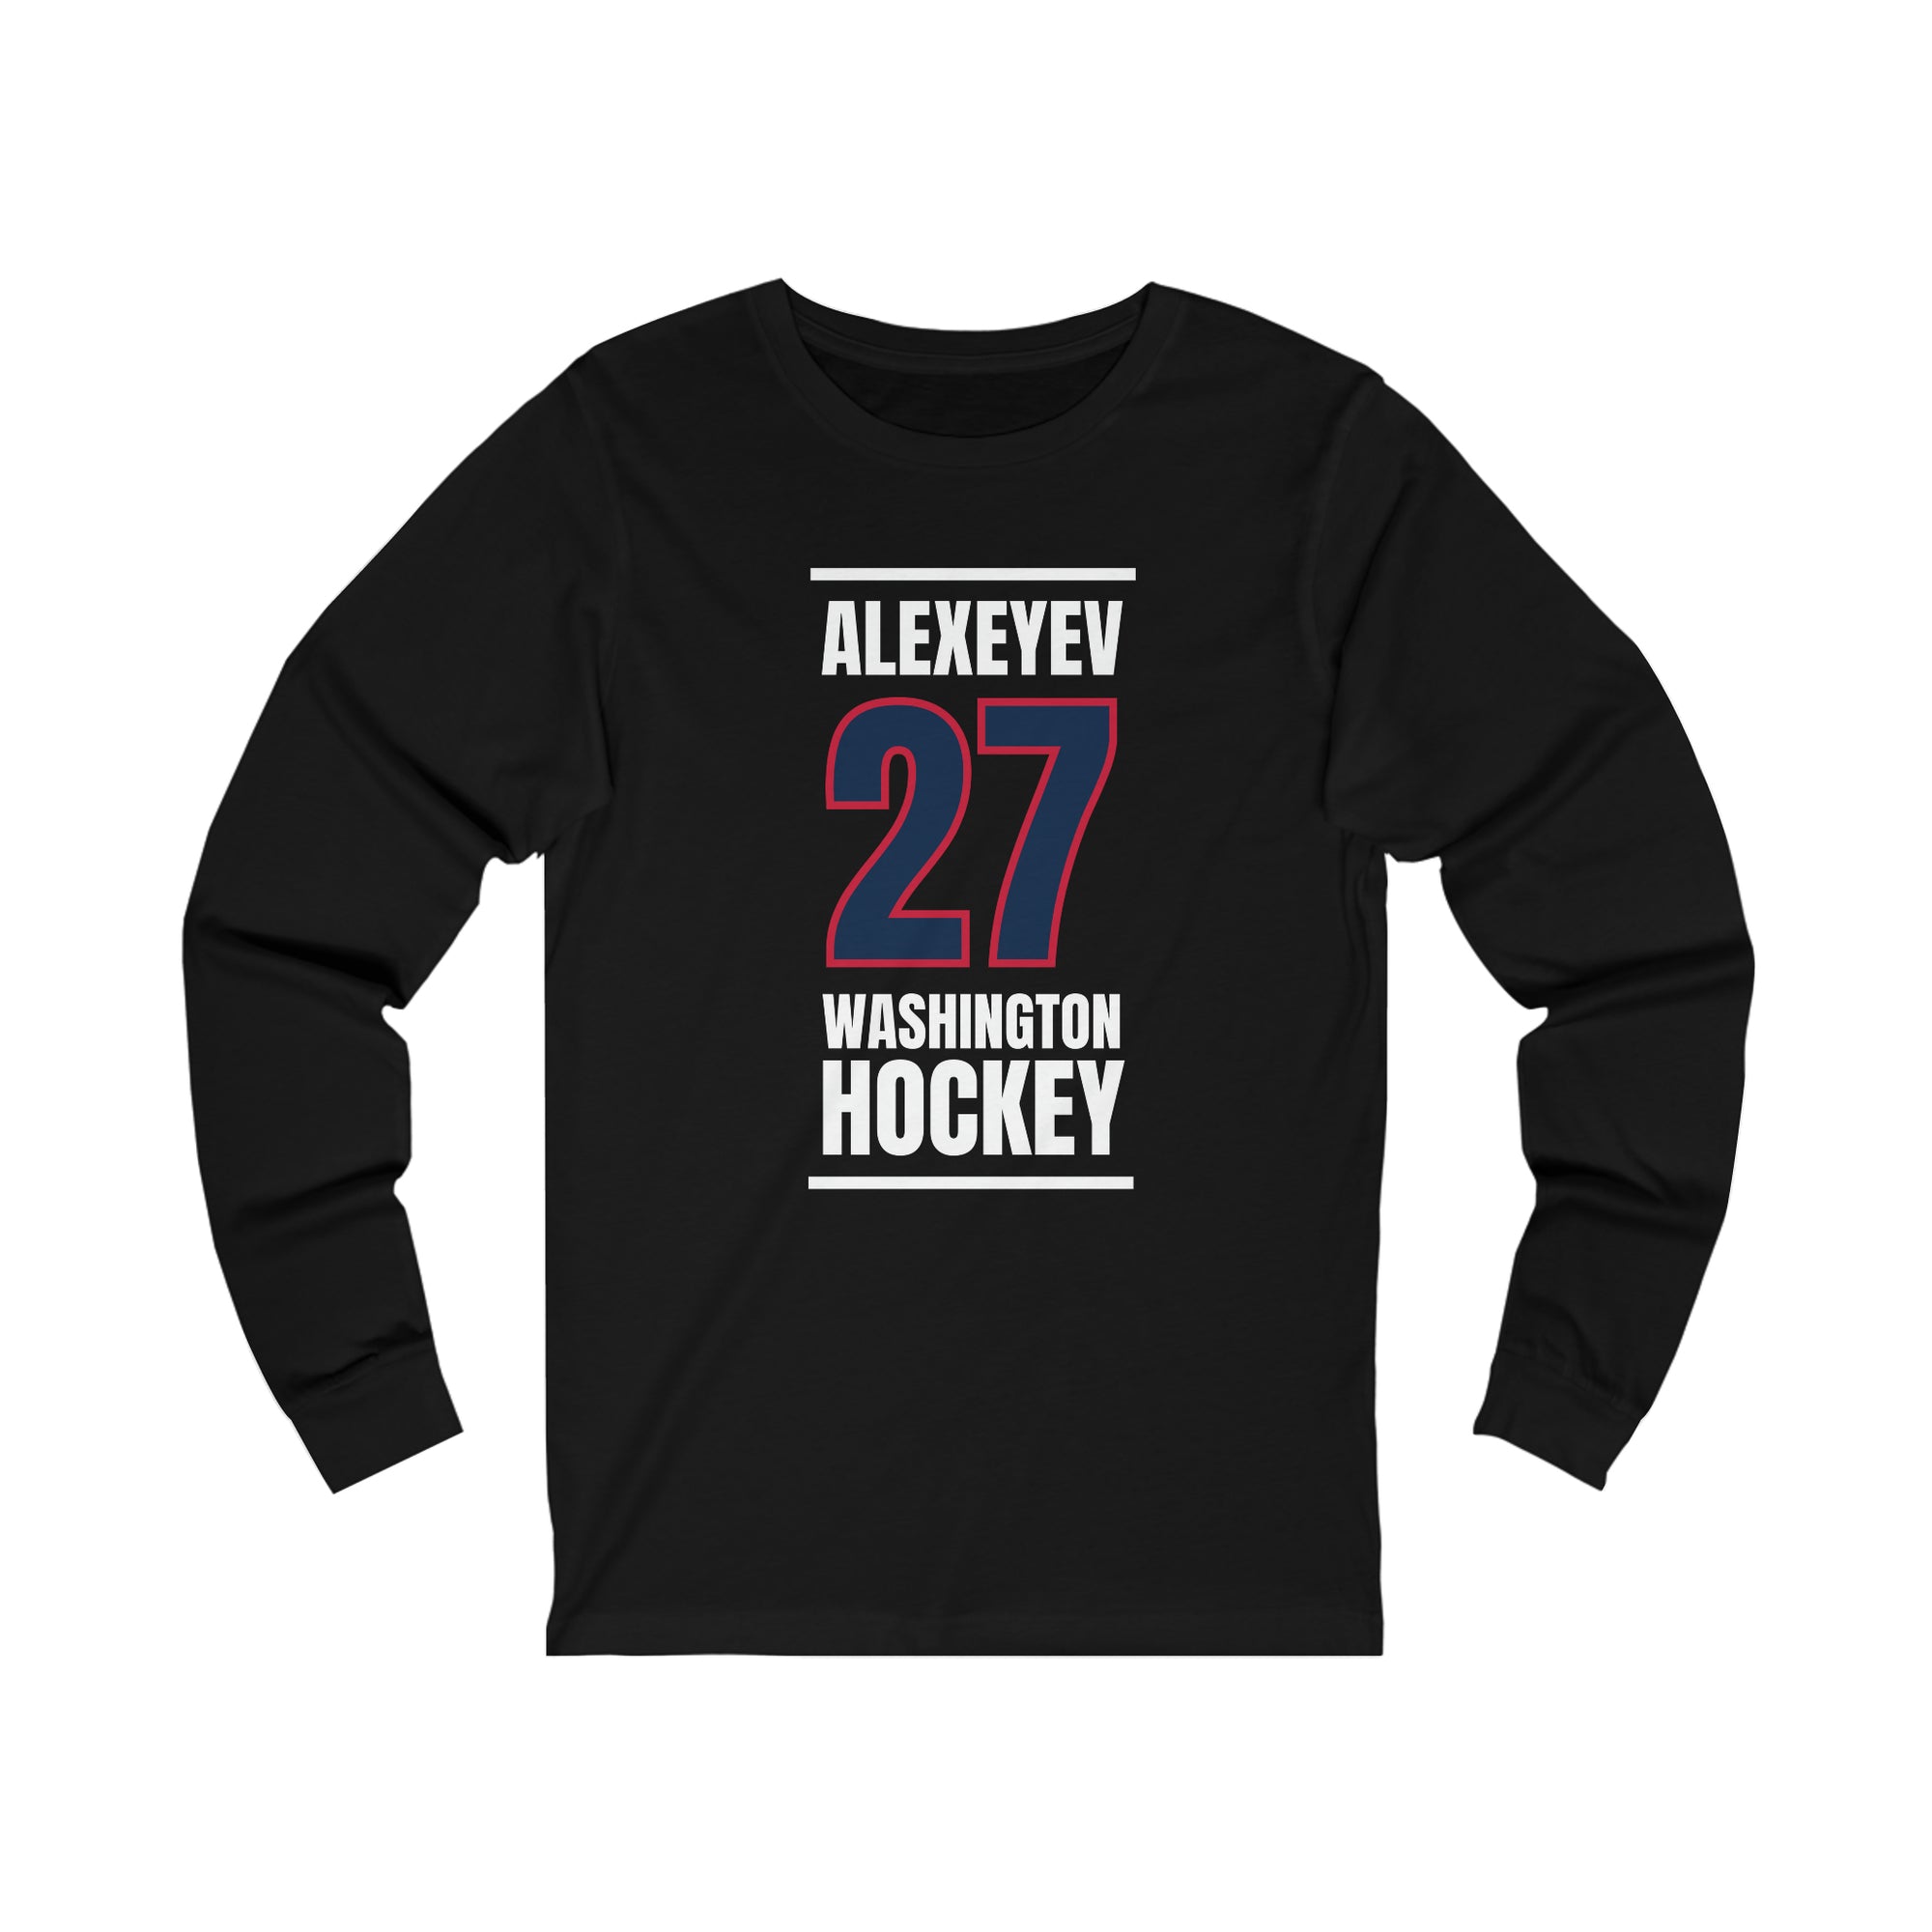 Alexeyev 27 Washington Hockey Navy Vertical Design Unisex Jersey Long Sleeve Shirt